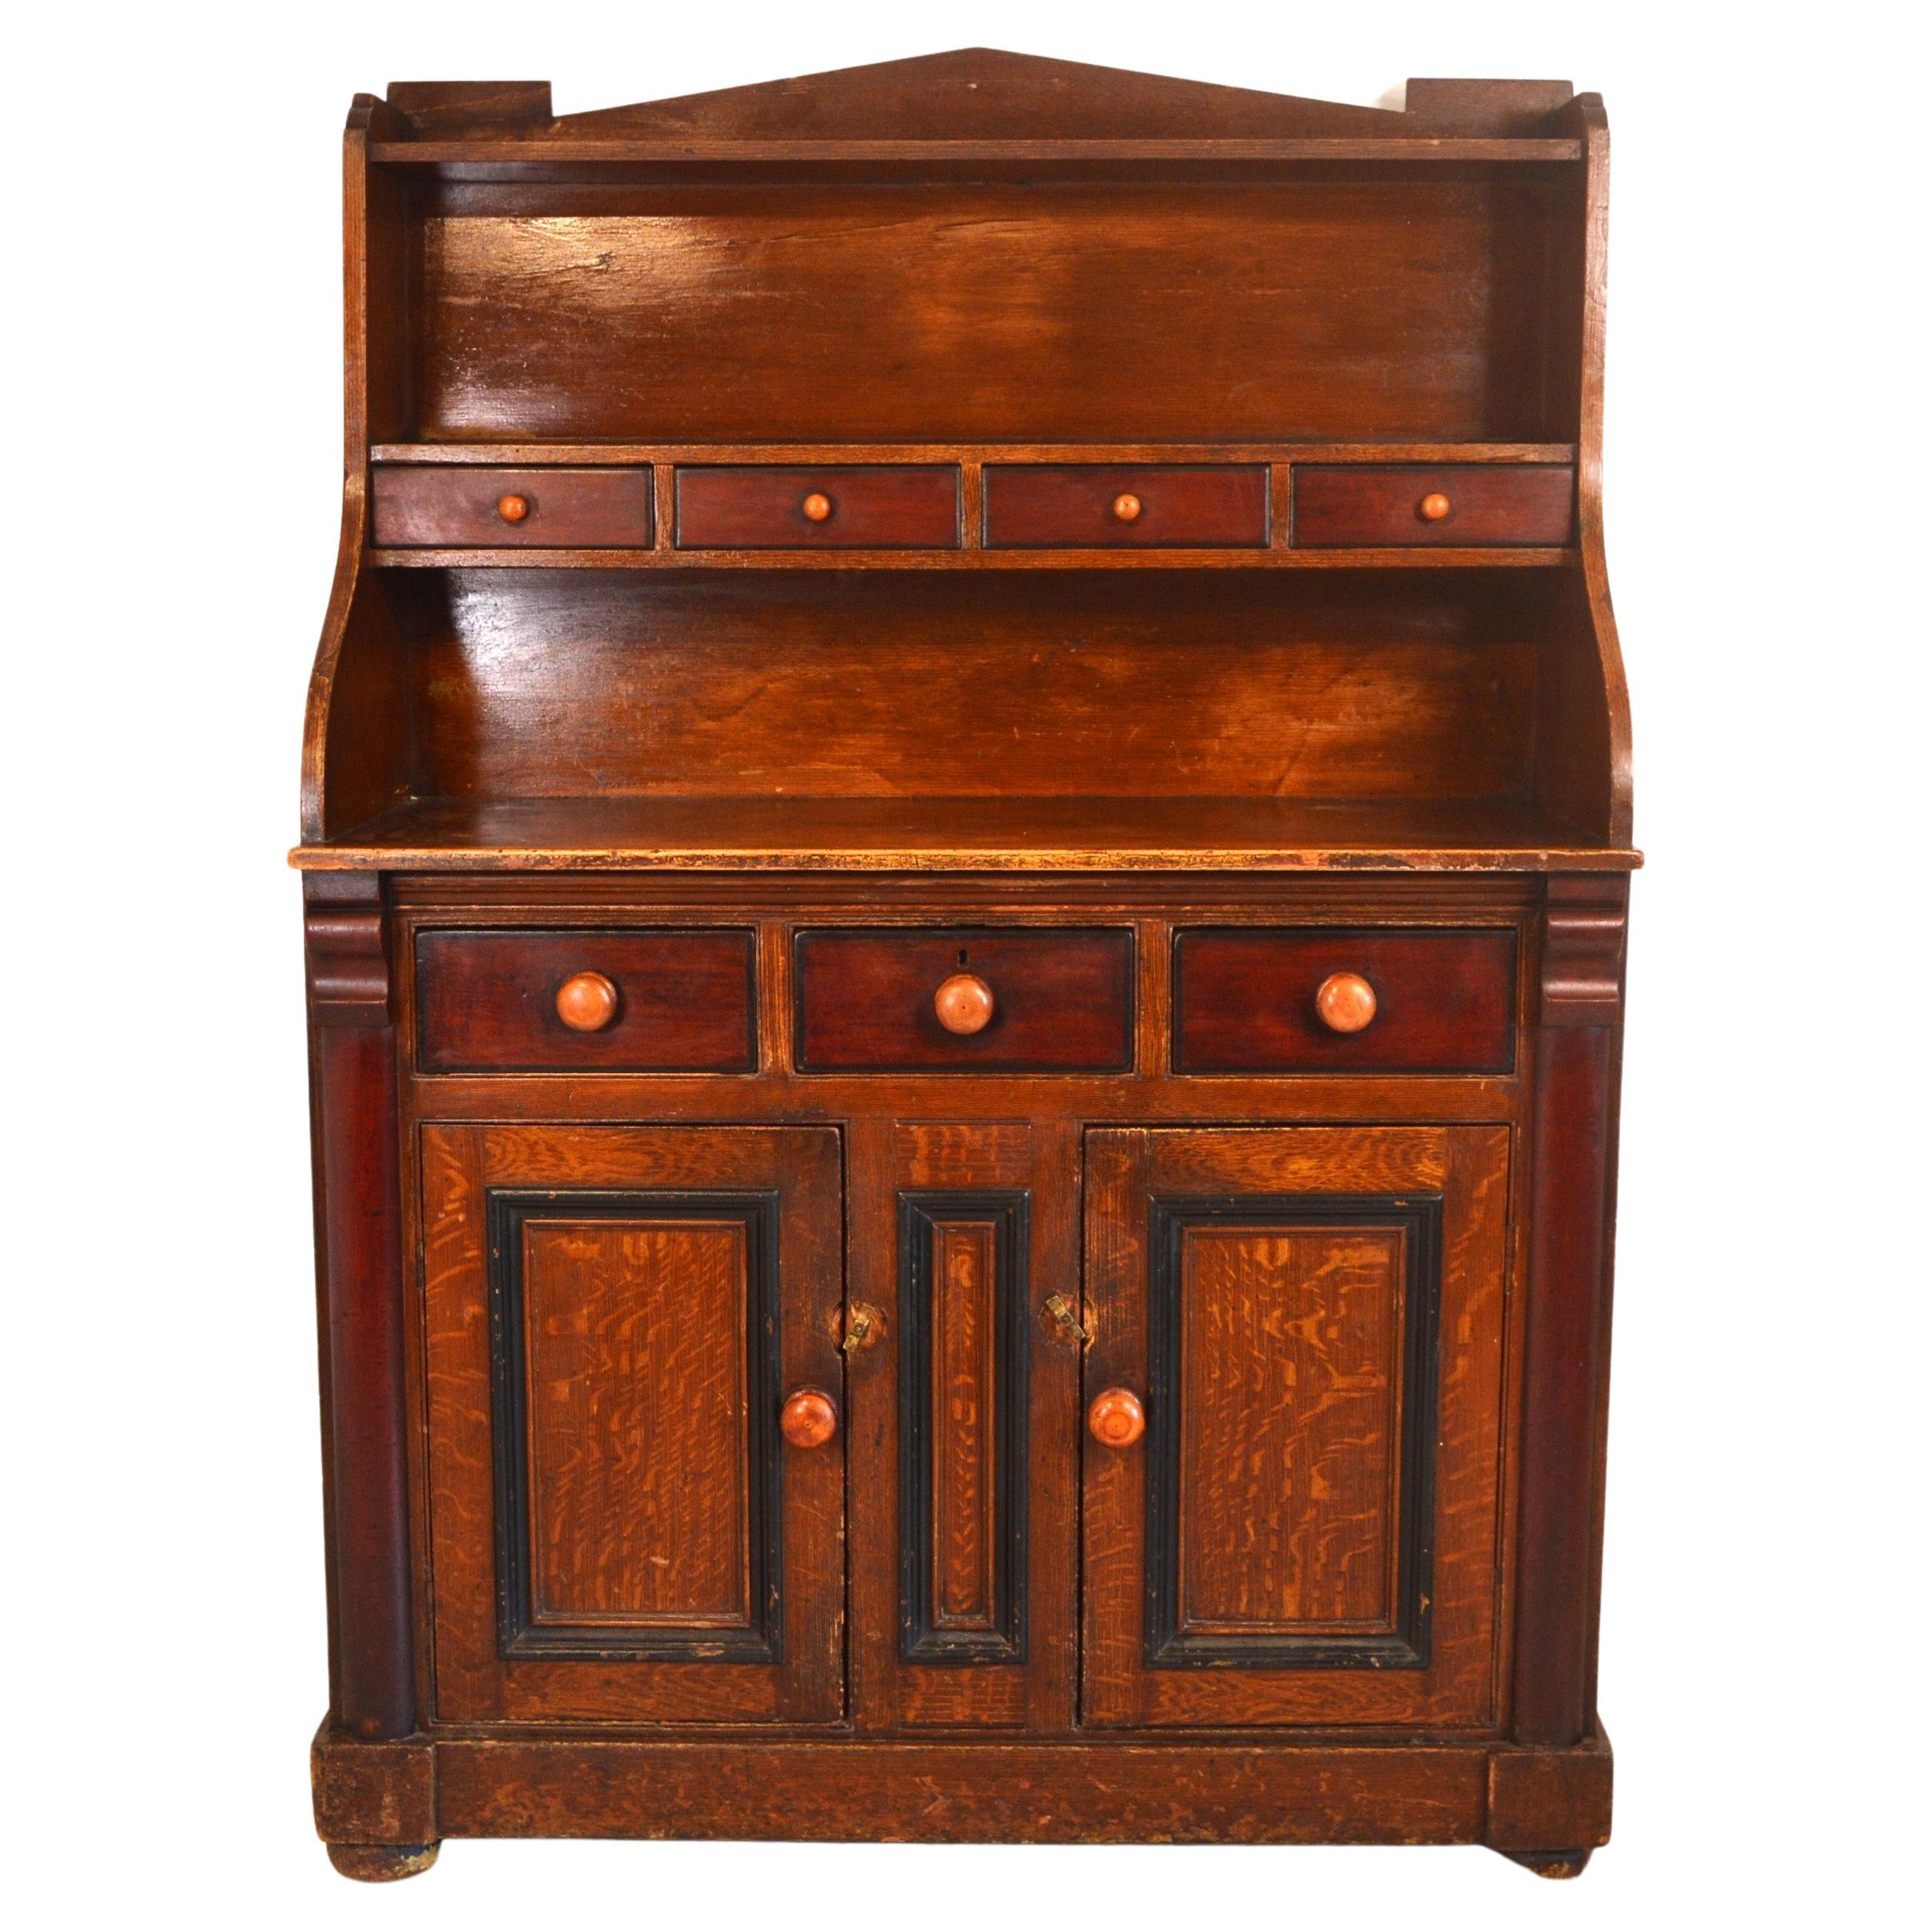 19th century Scottish dresser